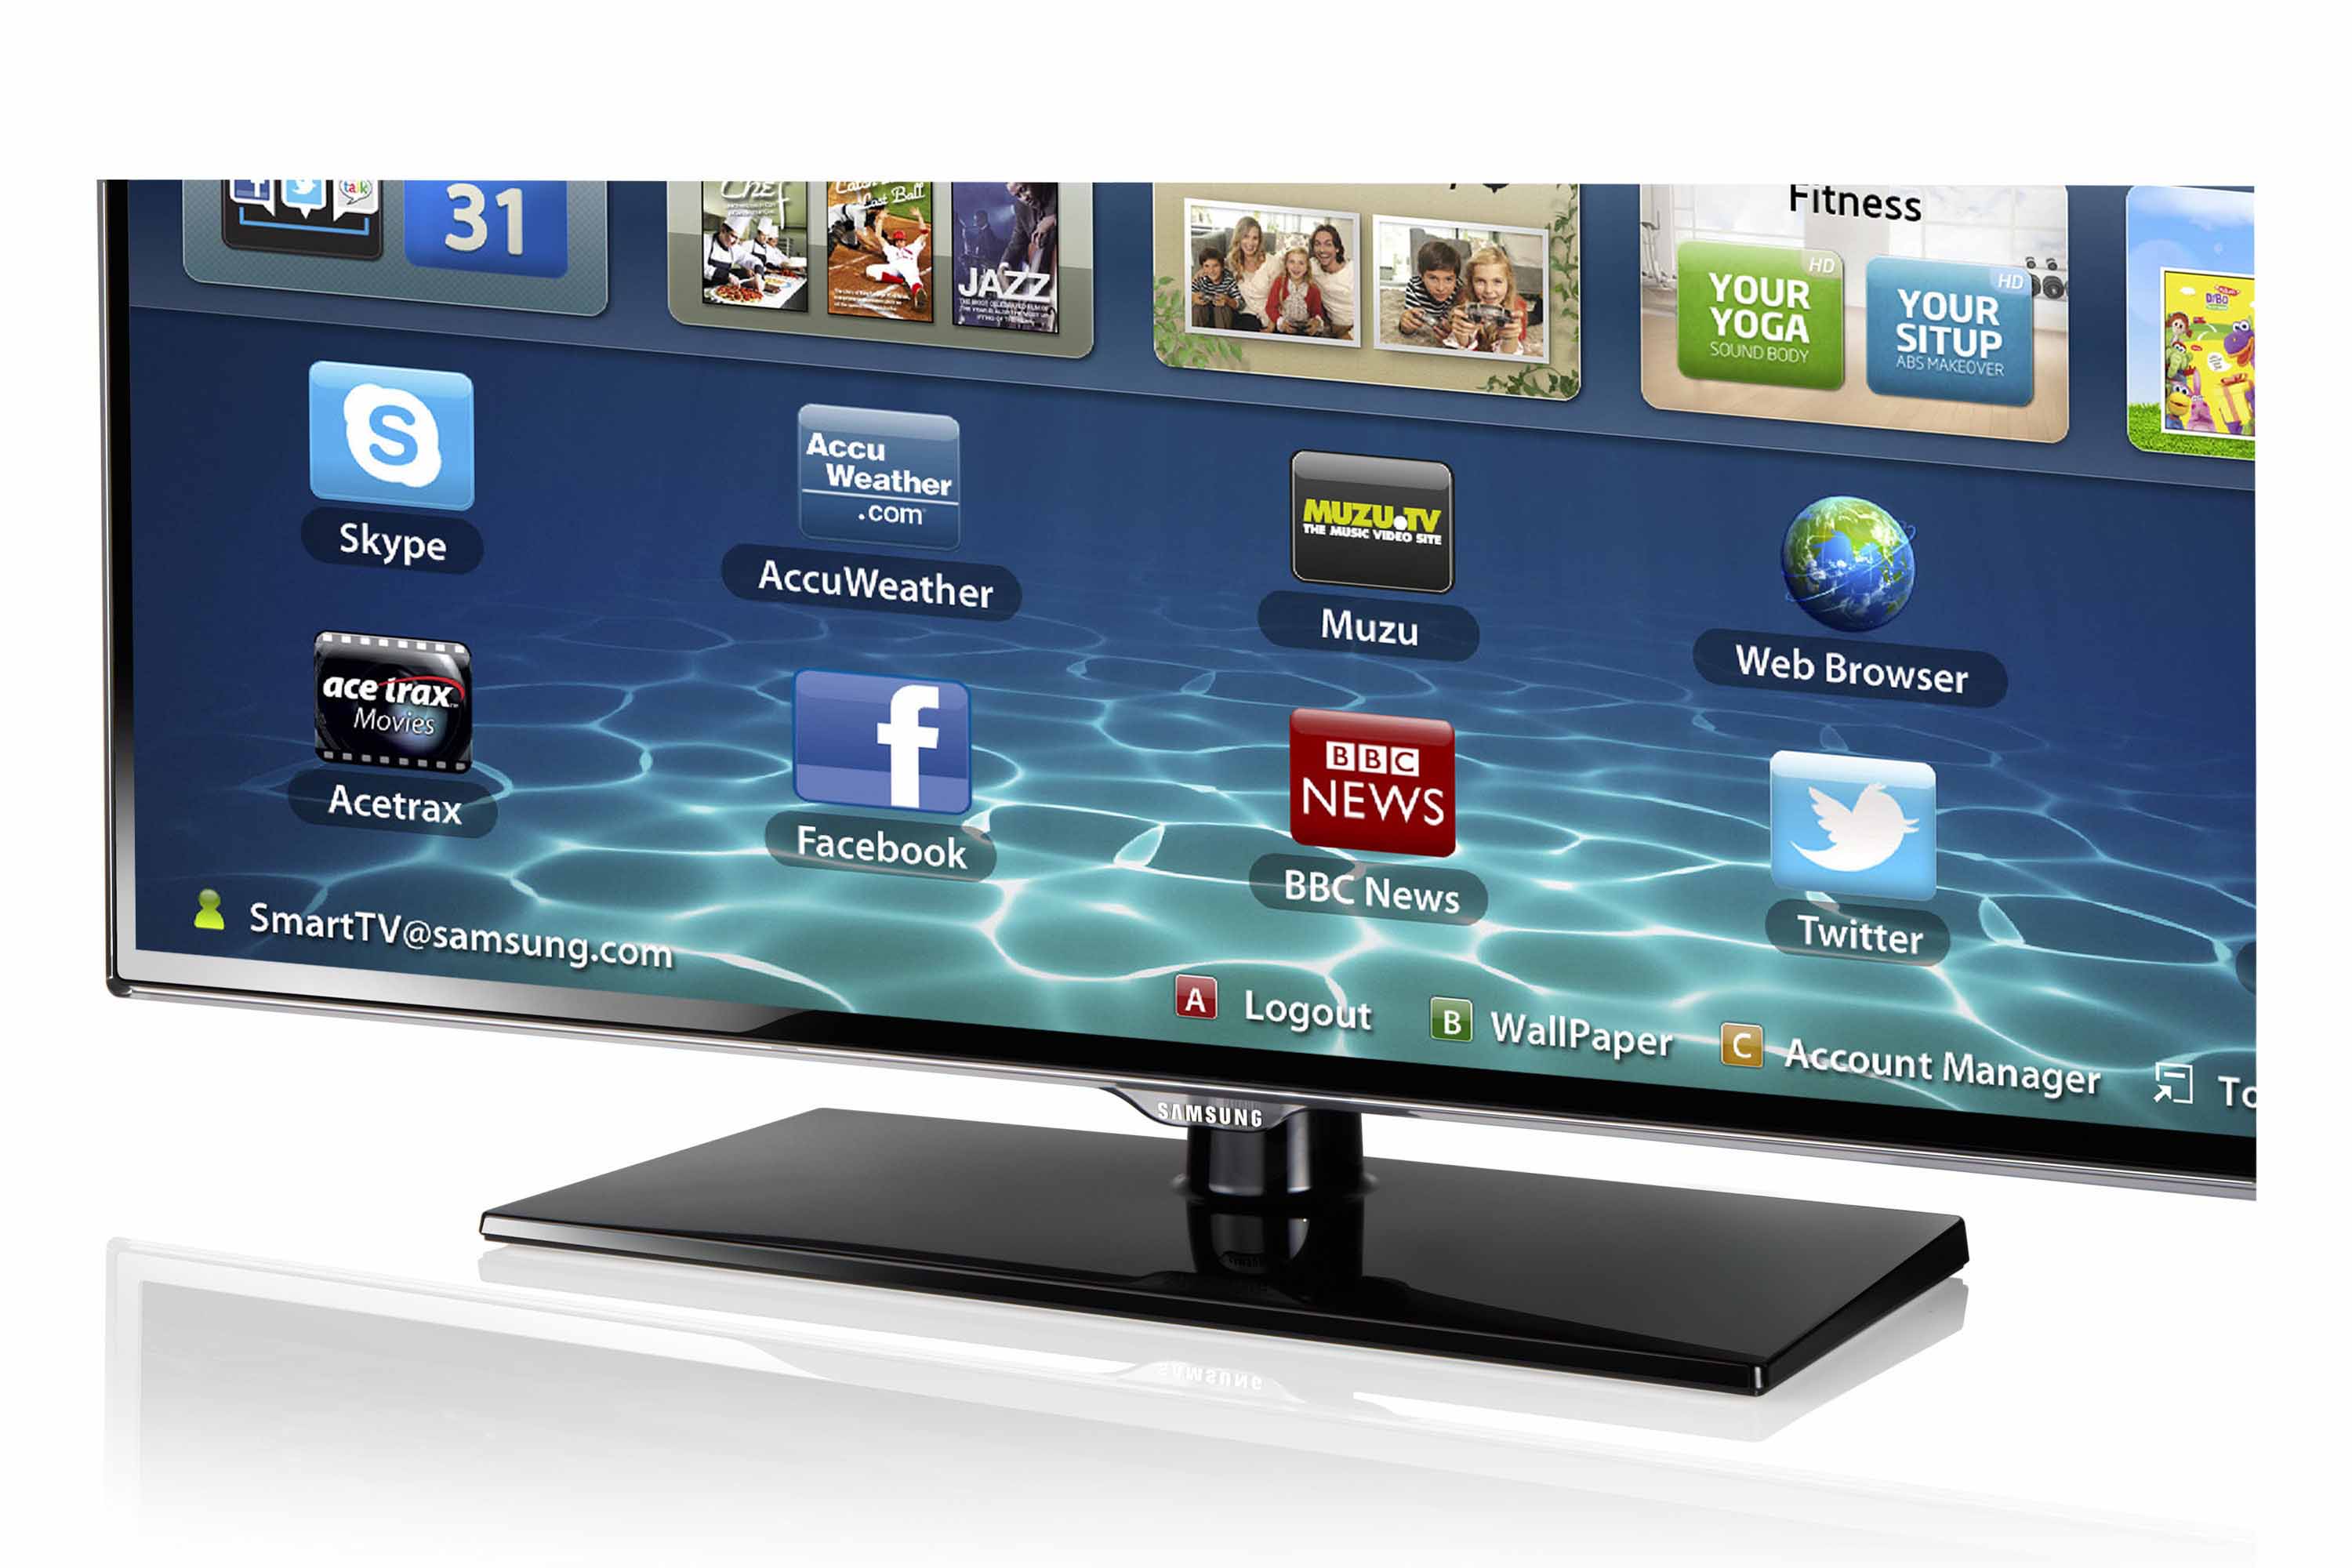 Samsung Led Tv Series 5 5000 37